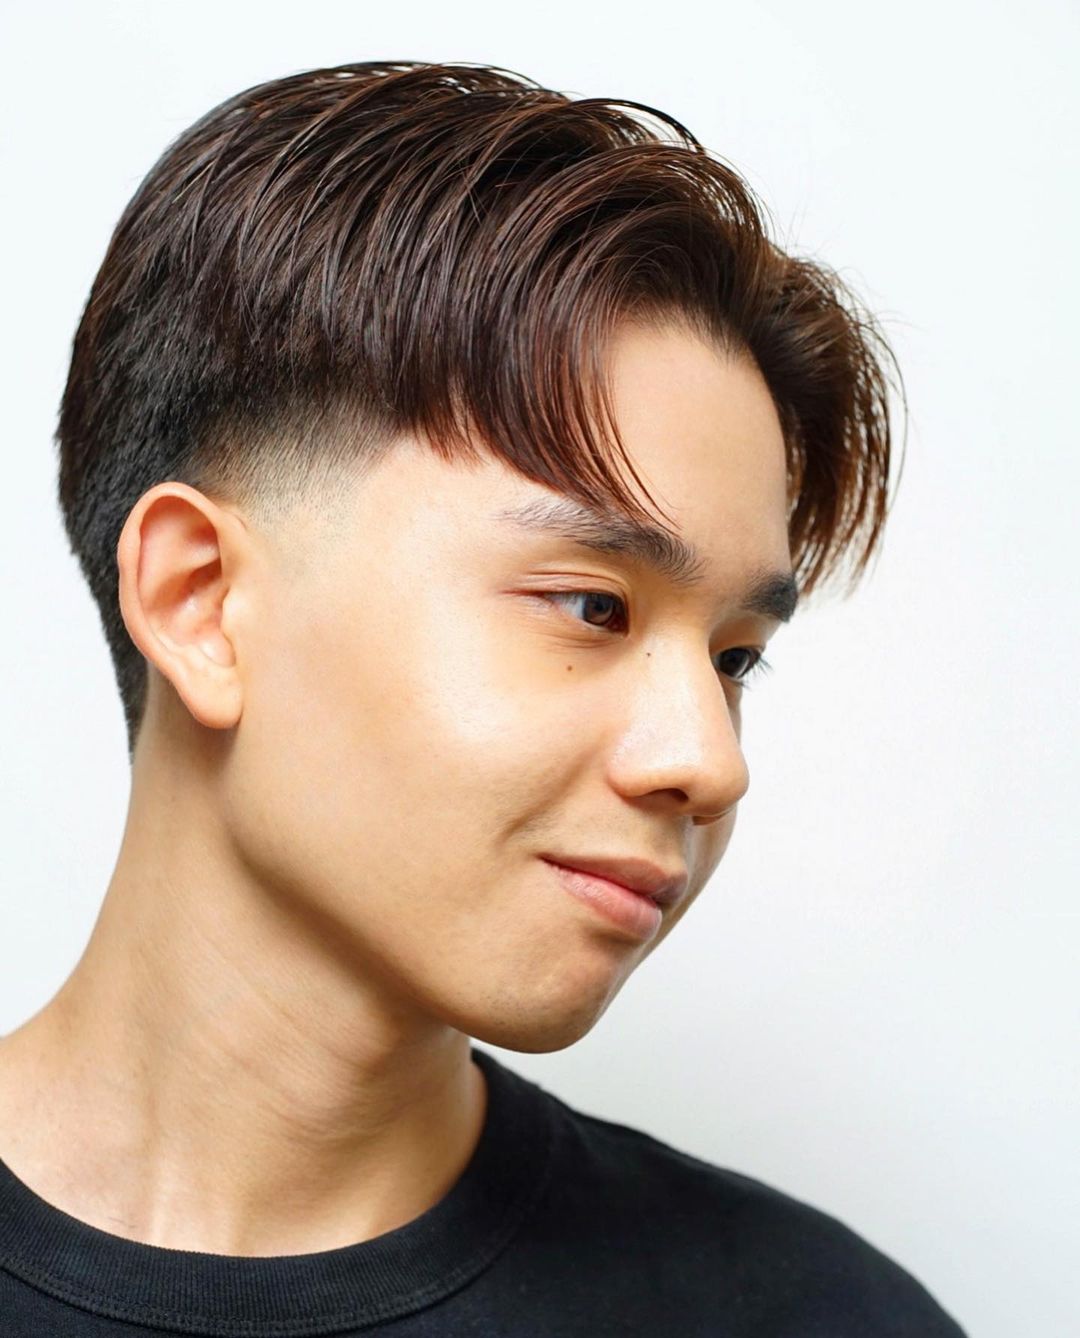 20+ eBoy Haircut Ideas for Every TikTok Star in 2022